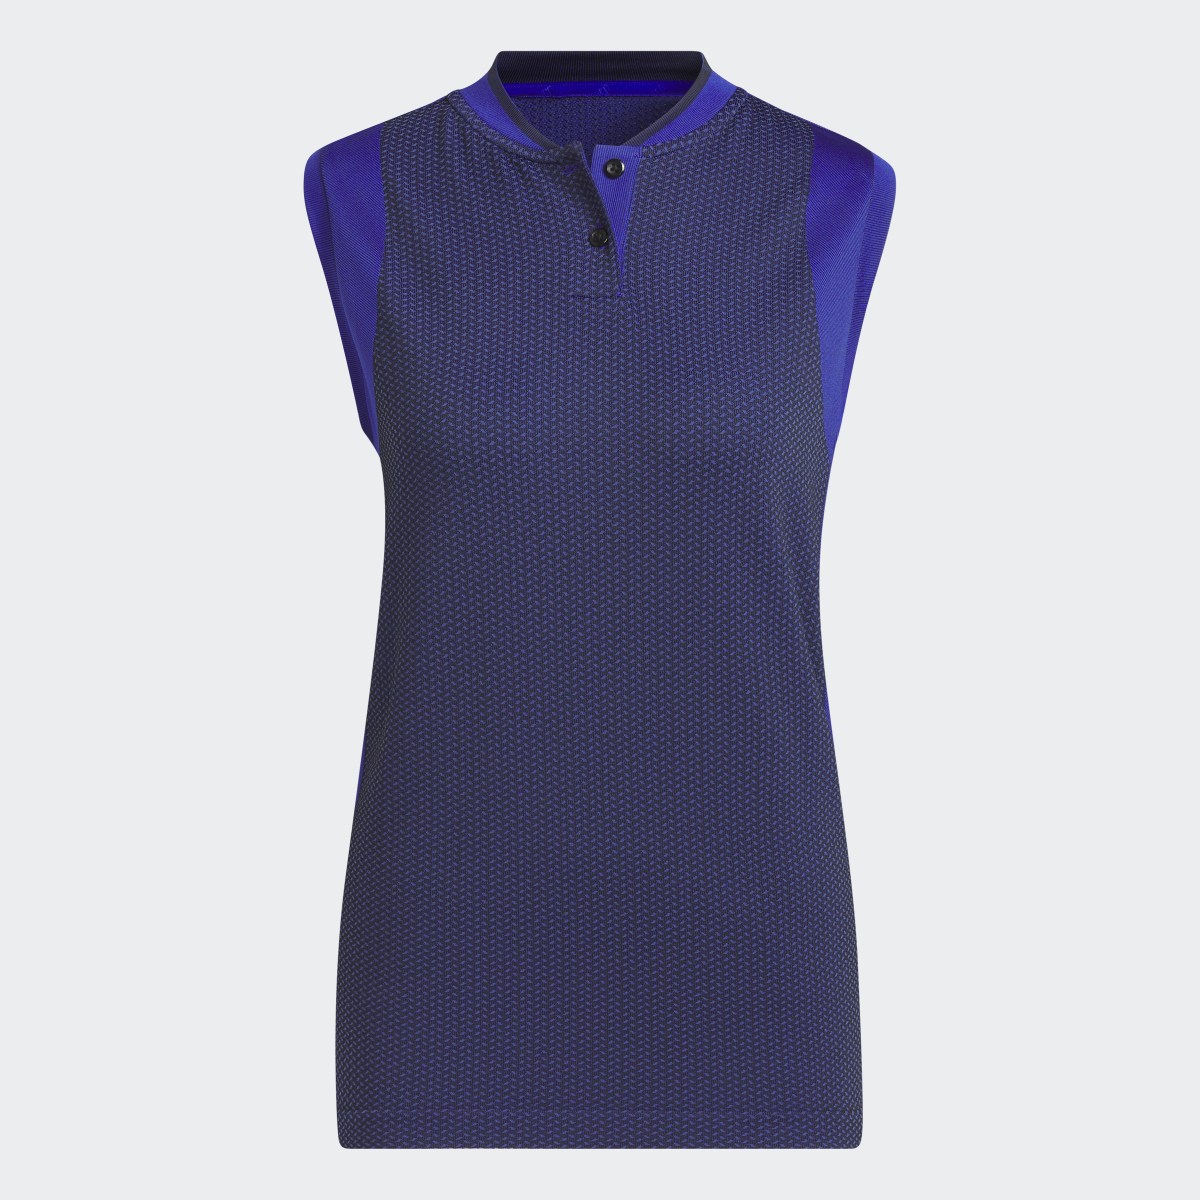 Adidas Ultimate365 Tour Sleeveless Primeknit Golf Polo Shirt. 5